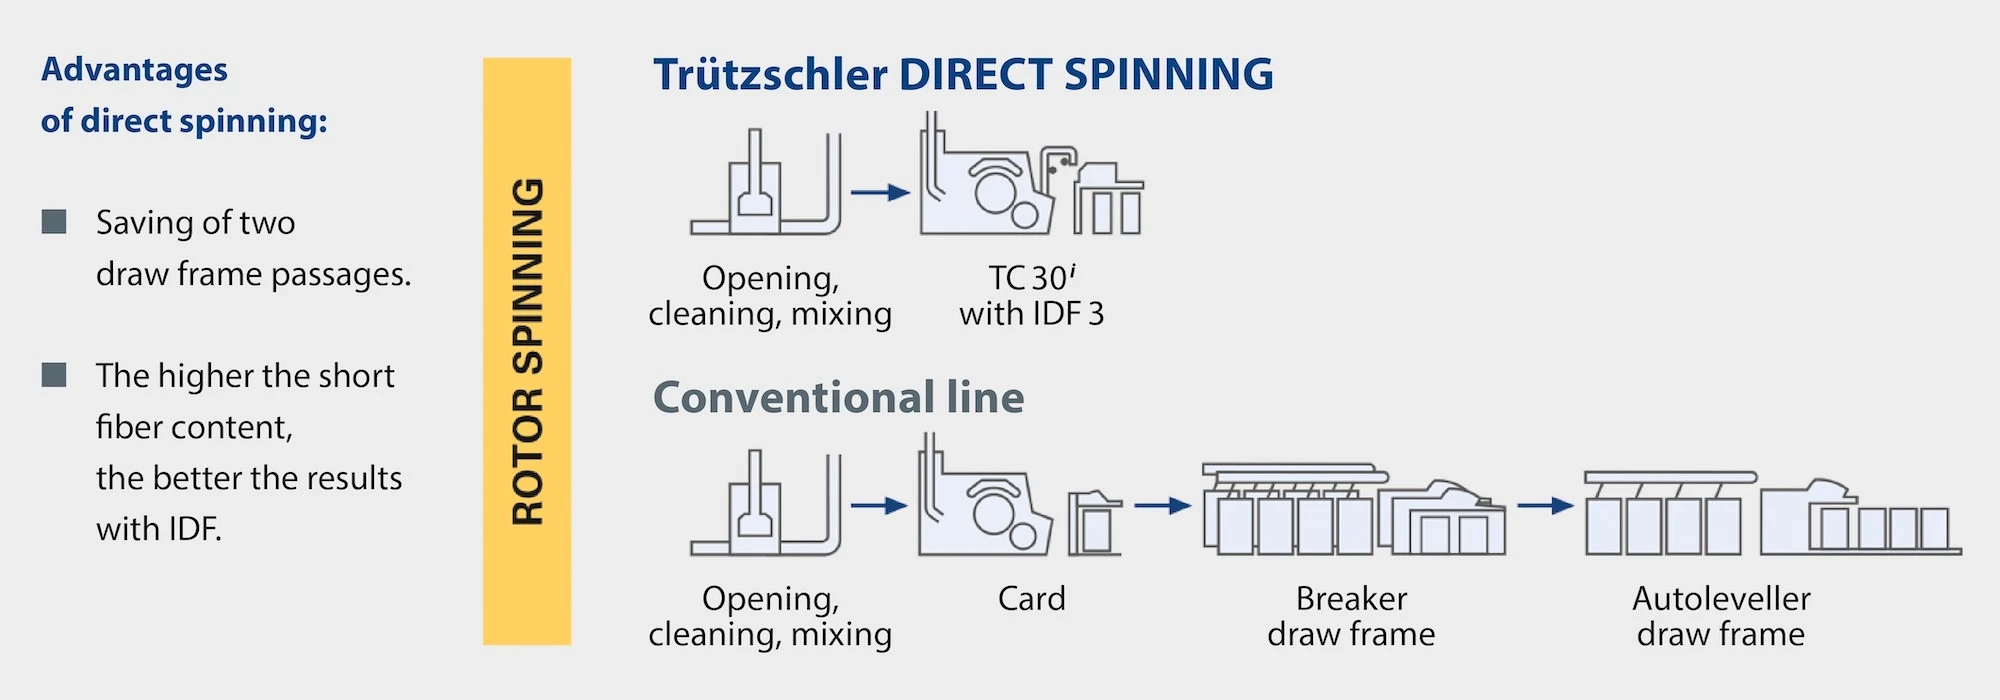 Advantages of Trützschler DIRECT SPINNING.